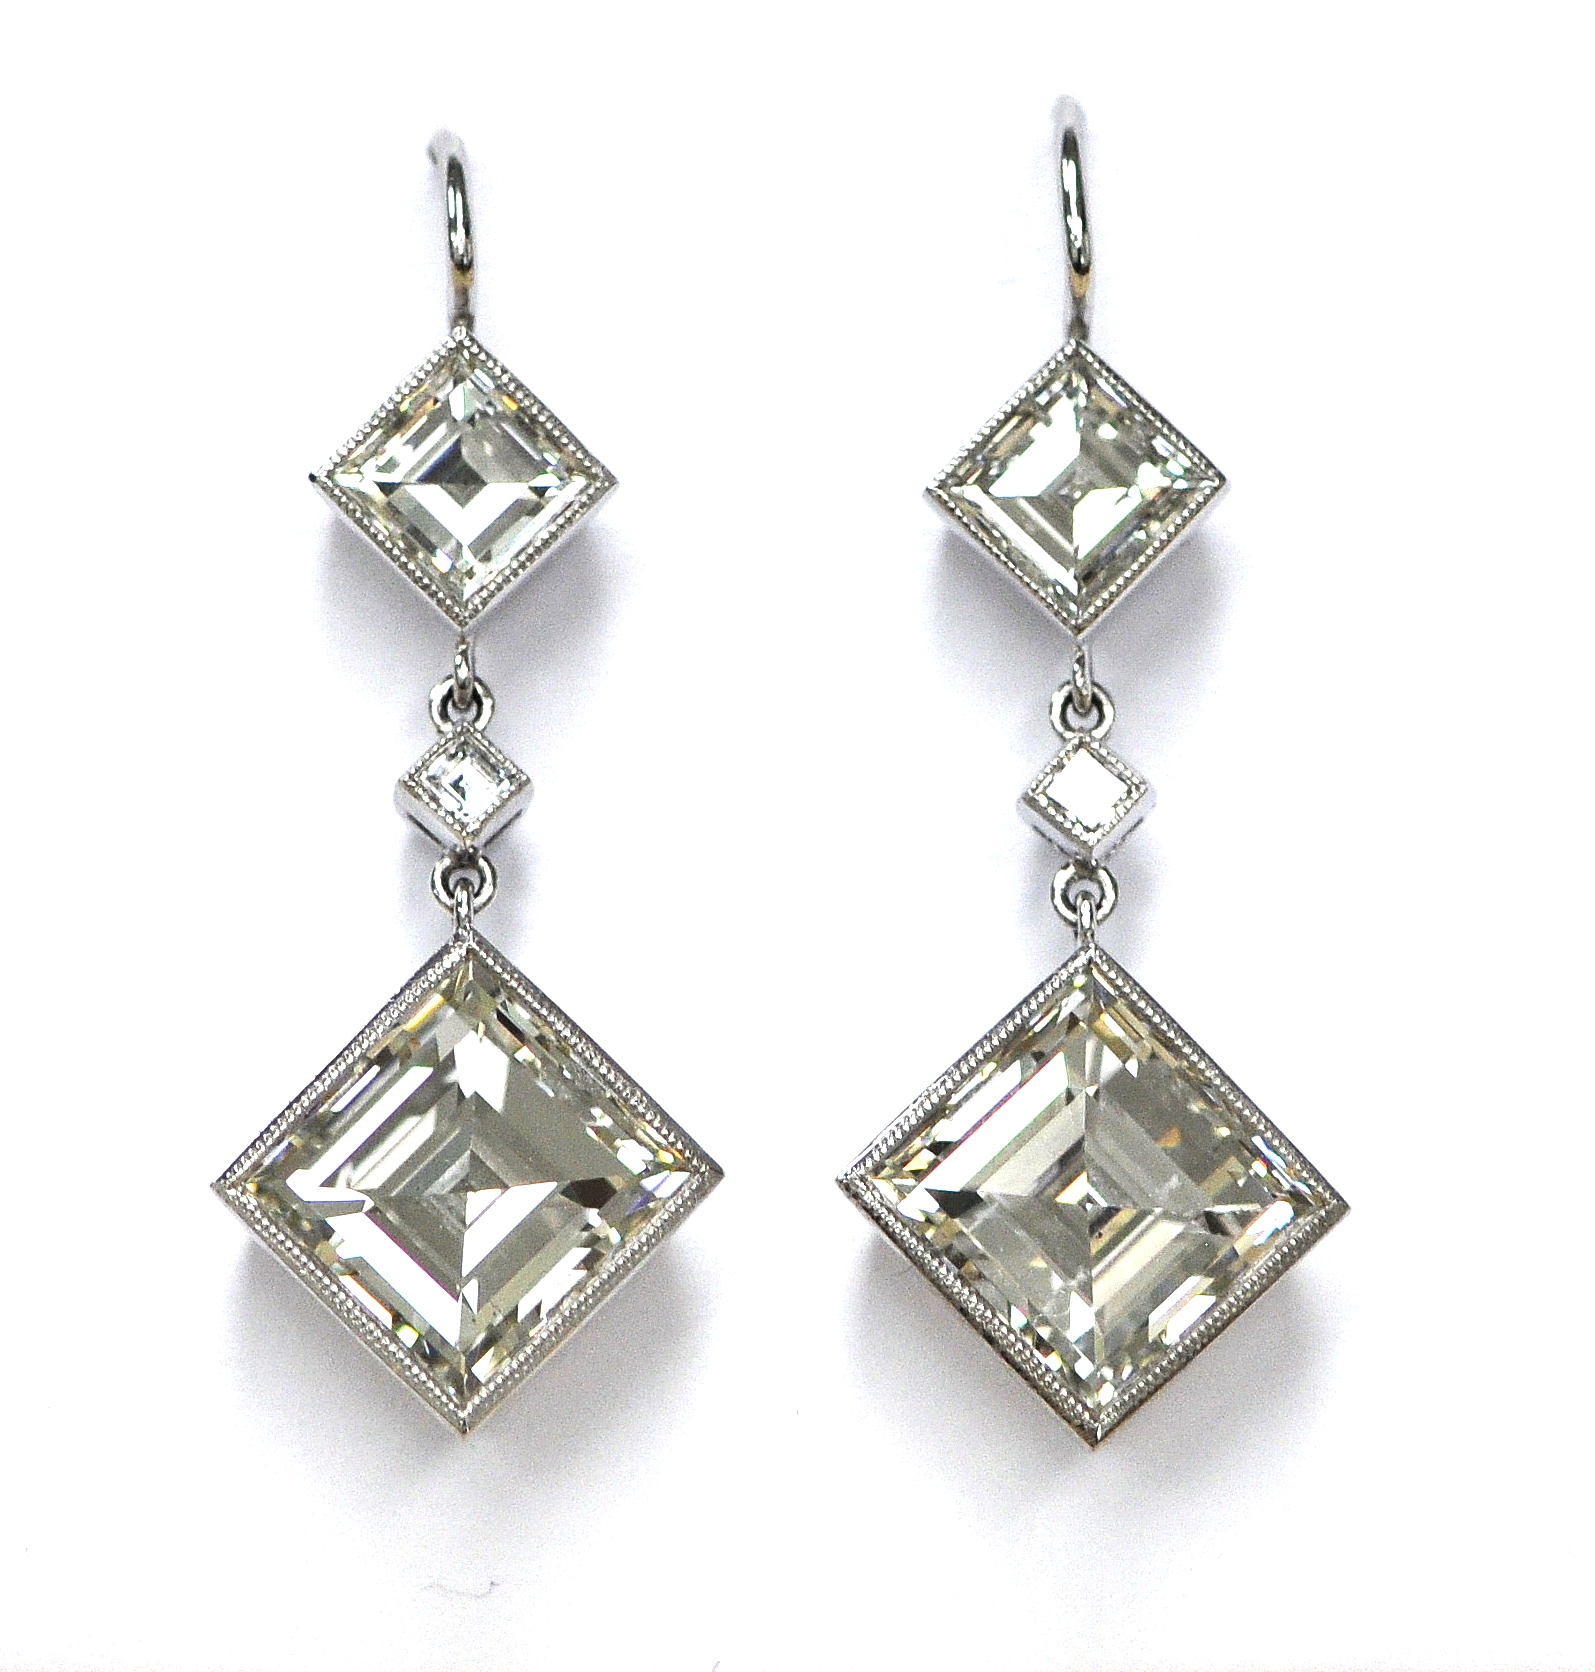 10ct Square Cut Diamond Earrings